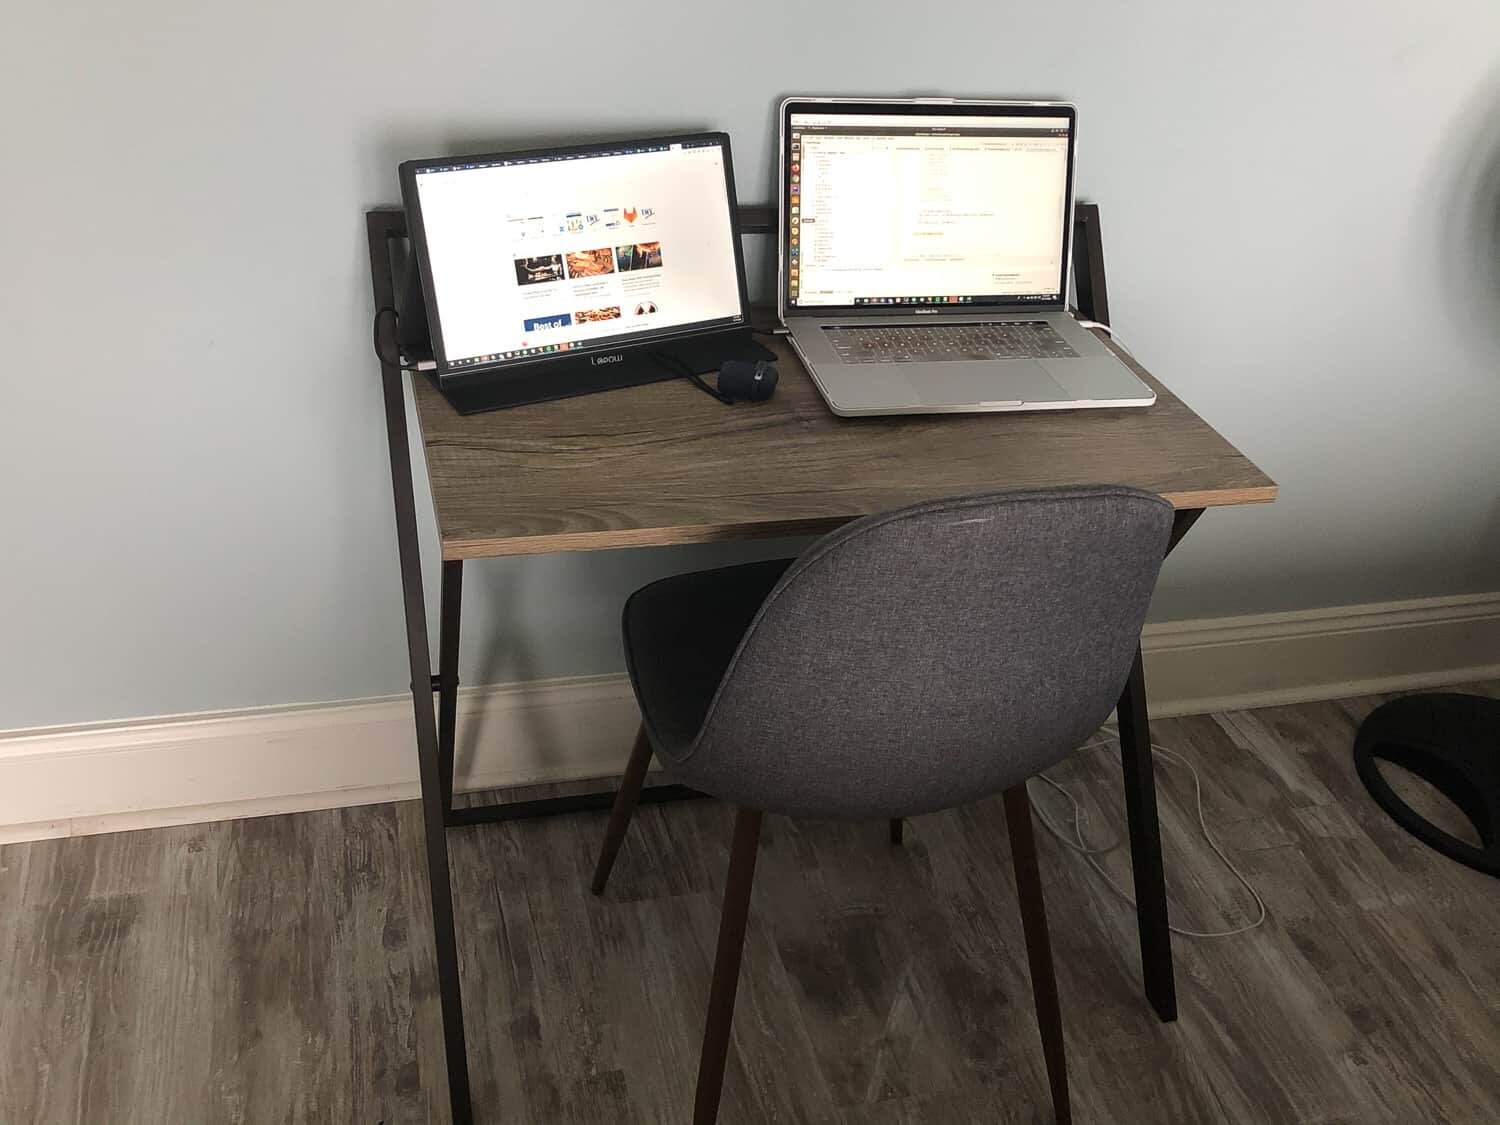 Small desk with computer setup